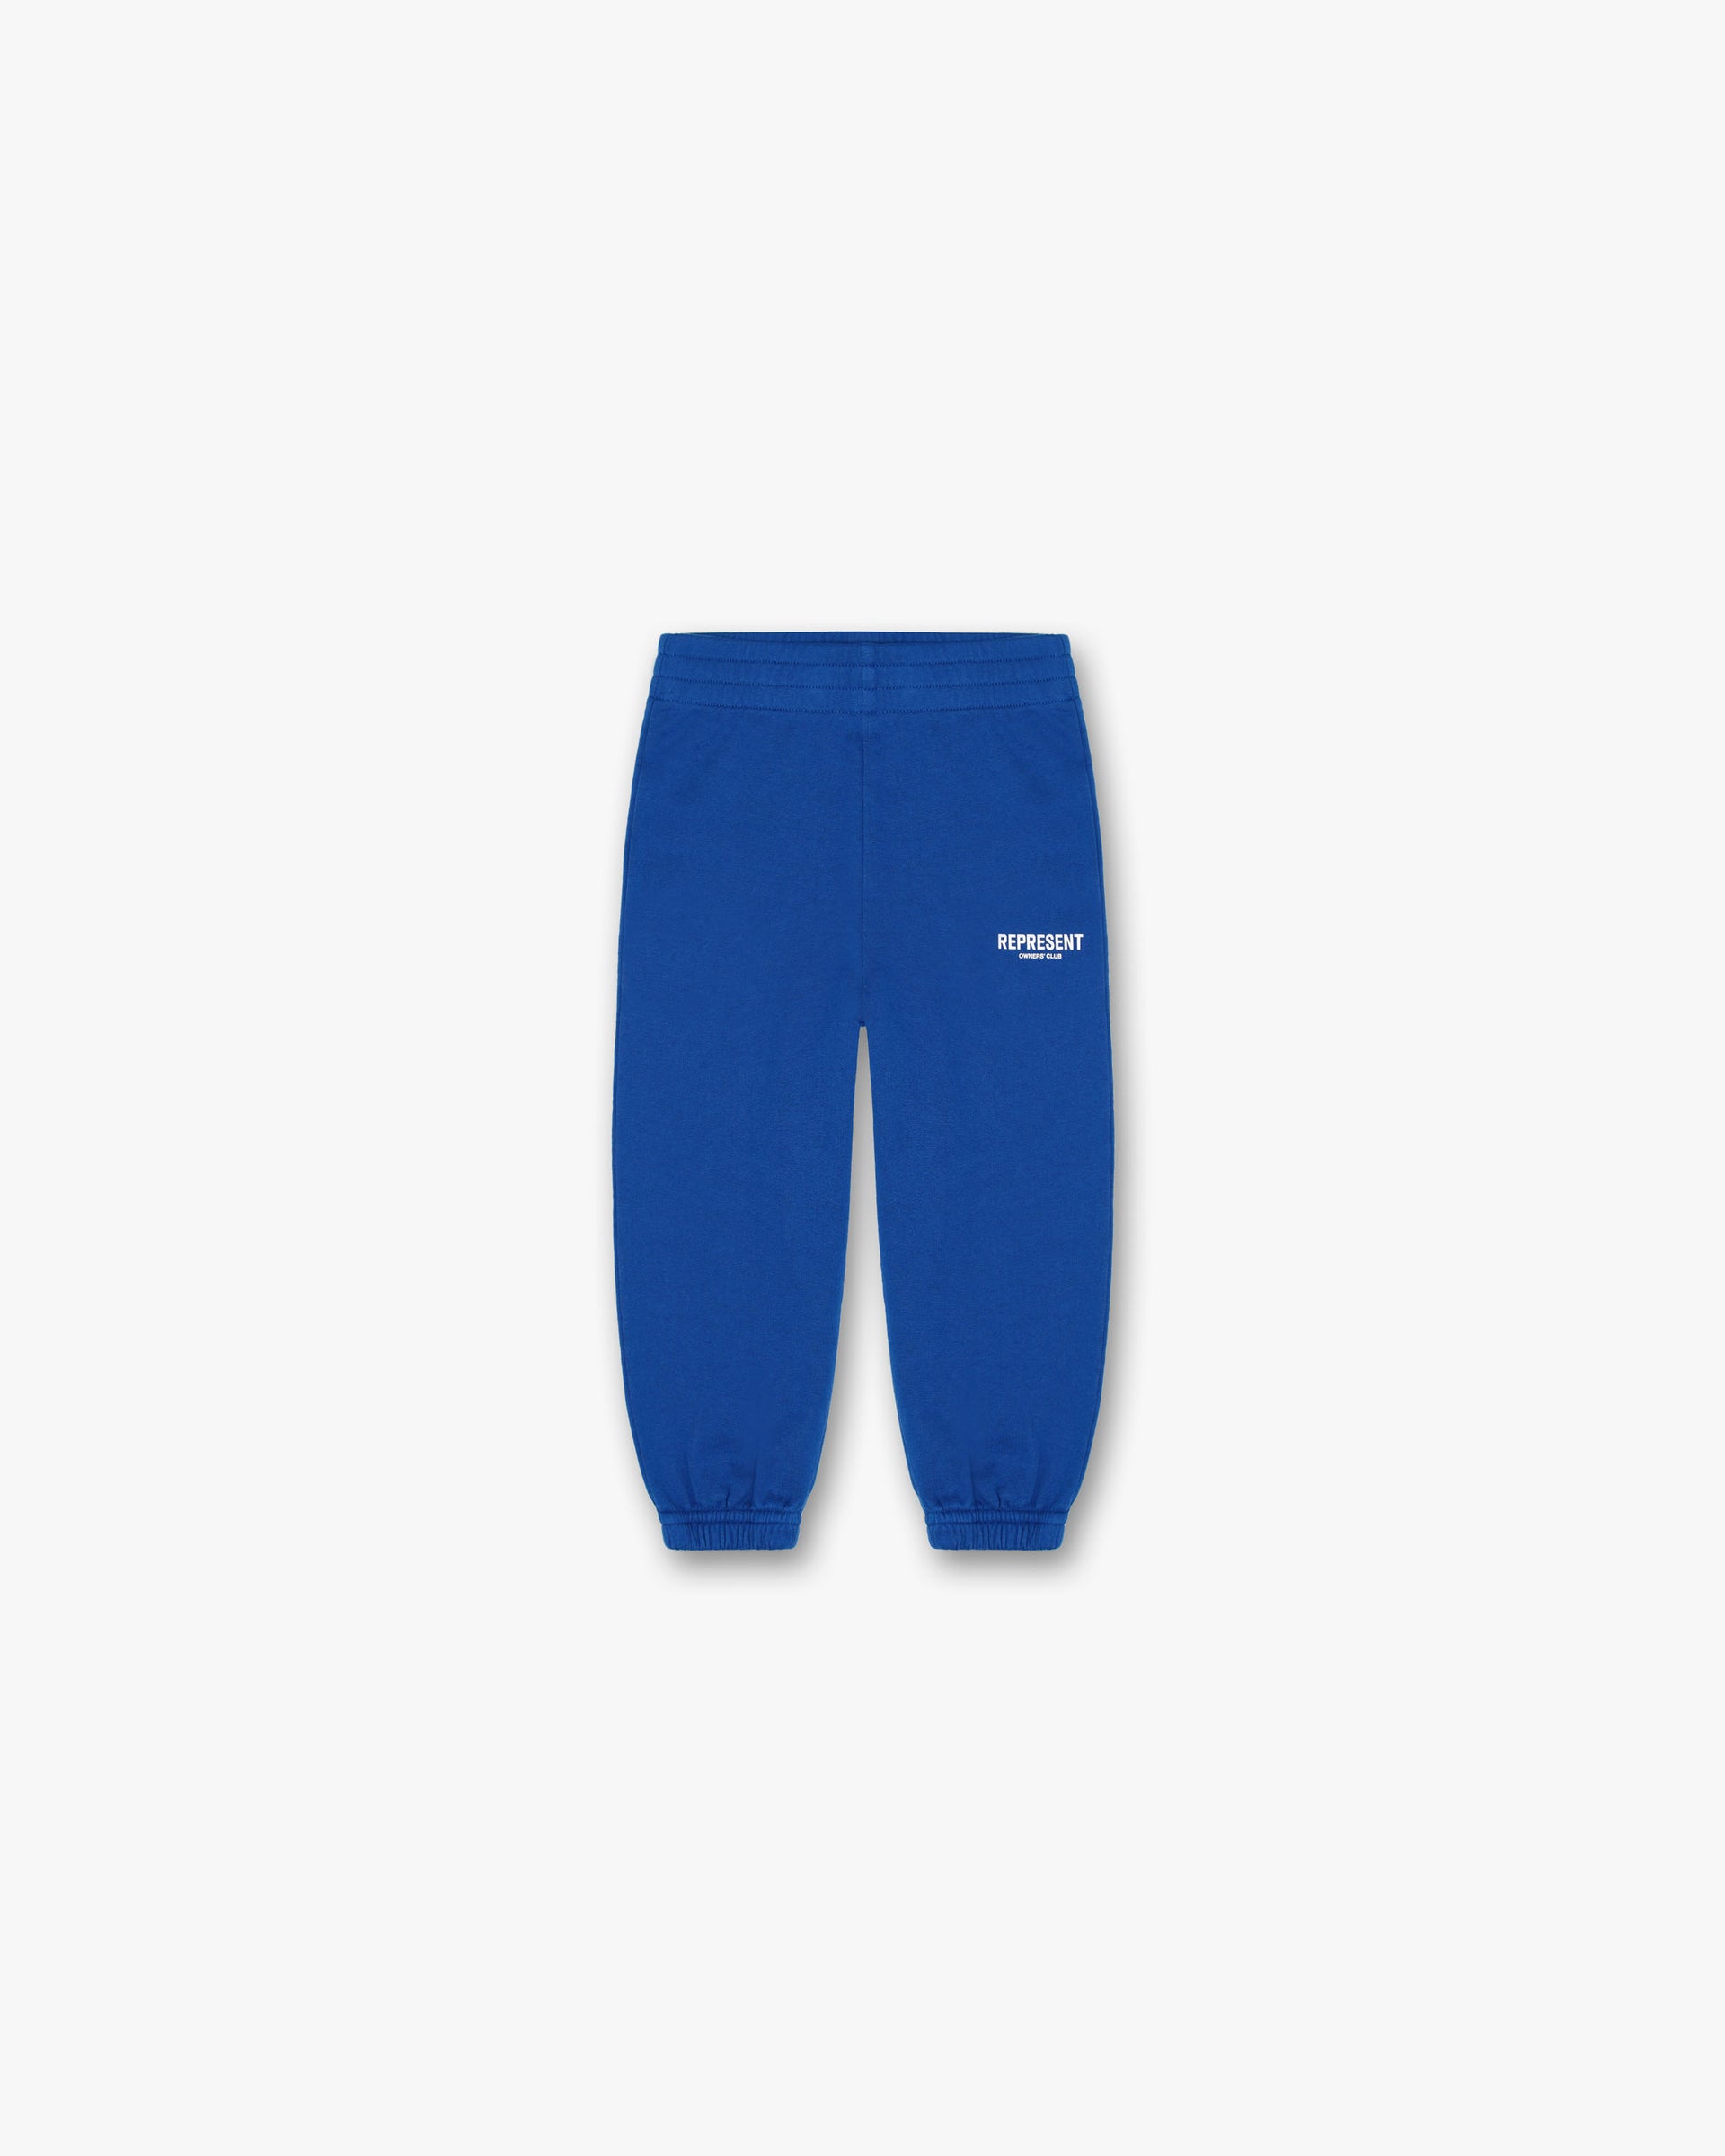 Represent Mini Owners Club Sweatpants | Cobalt Pants Owners Club | Represent Clo